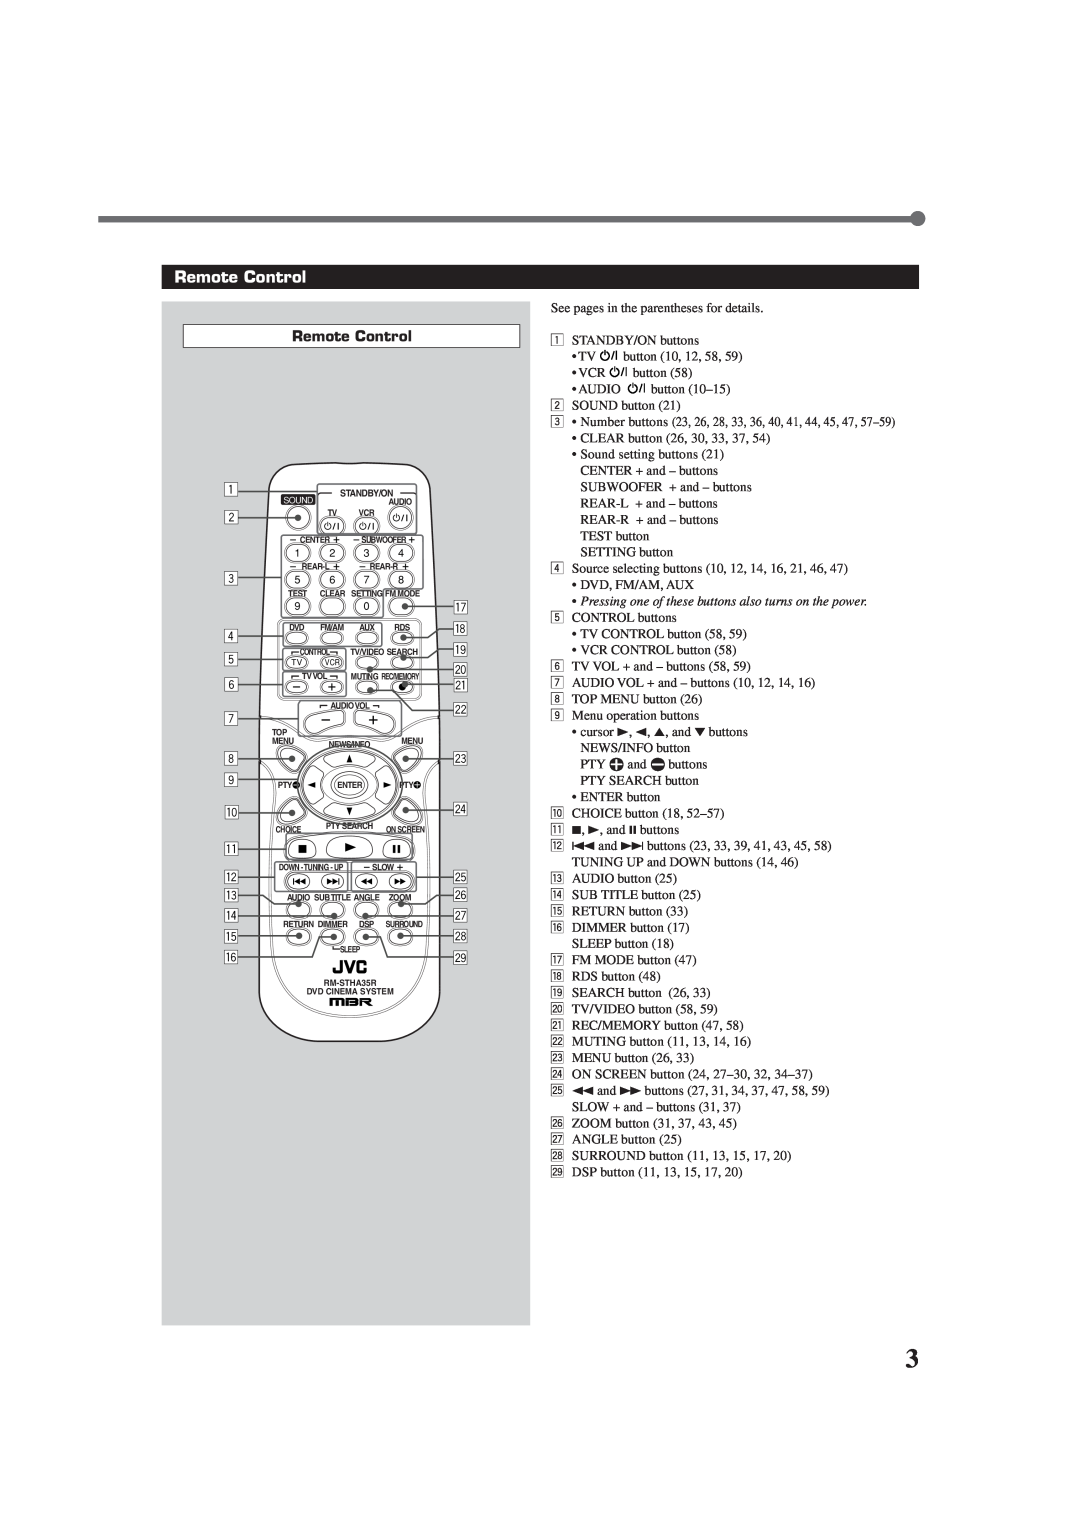 JVC TH-A35 manual Remote Control 